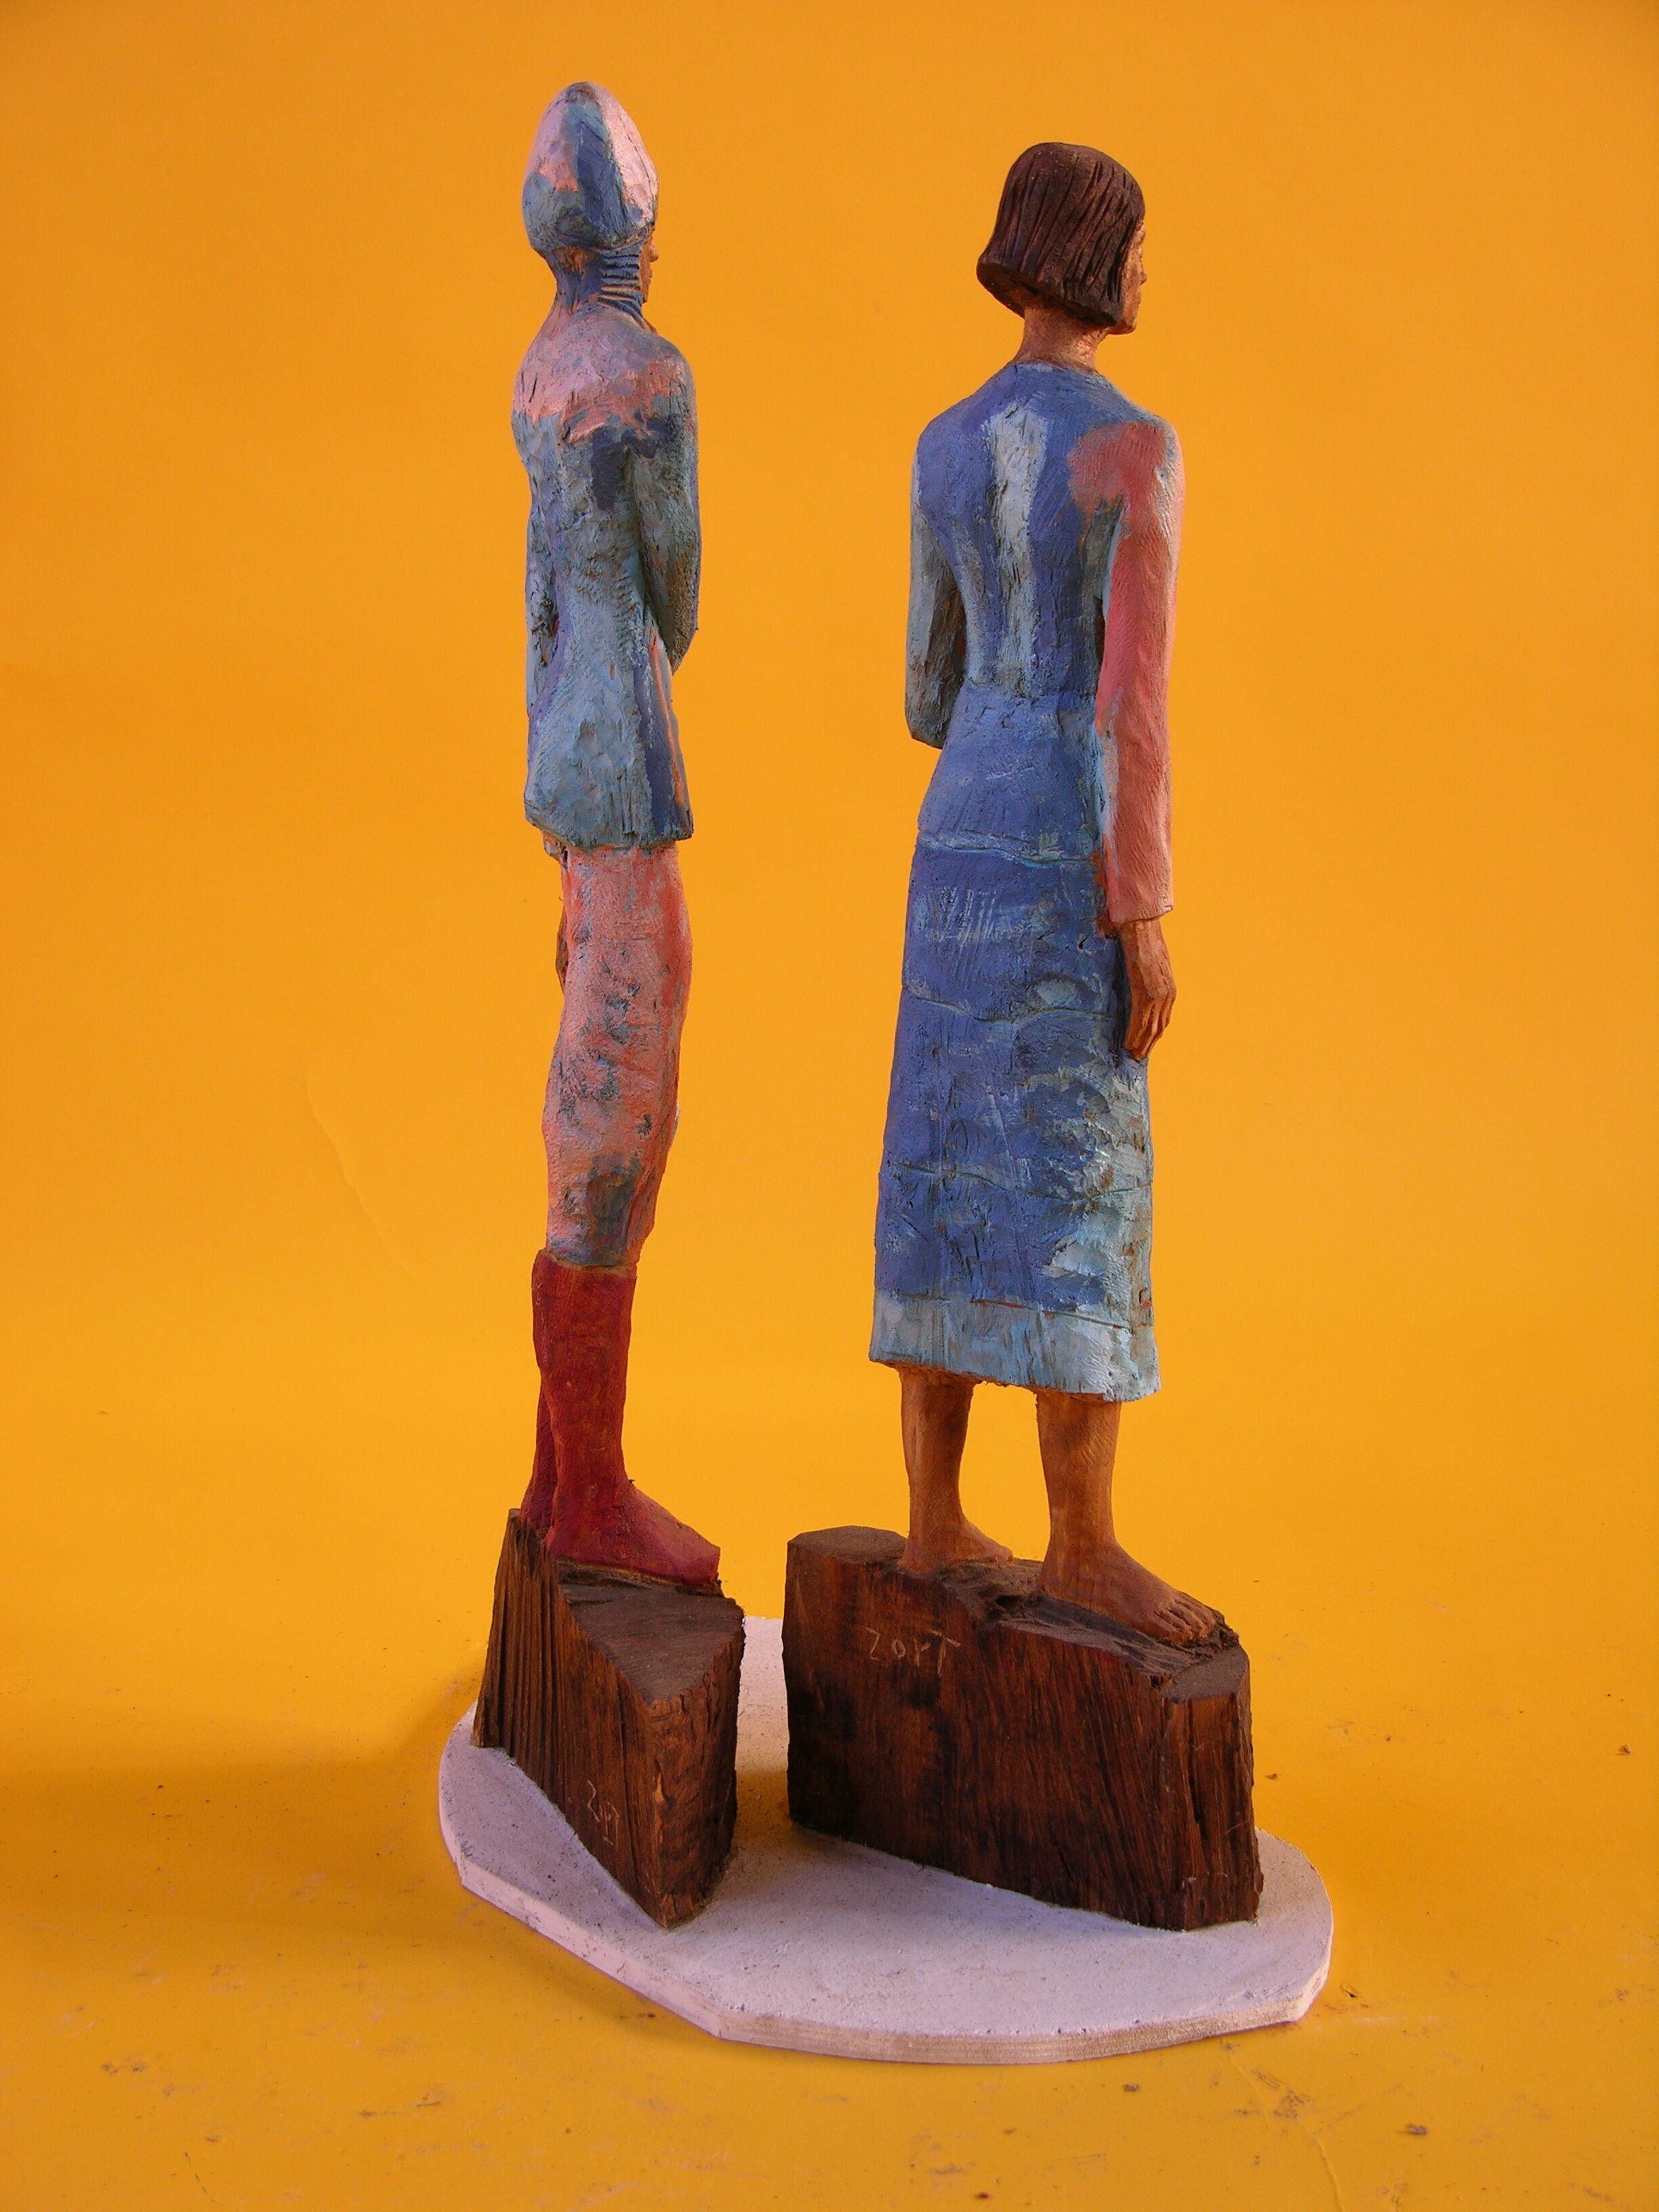 Sculpture "Small pair" (2014)